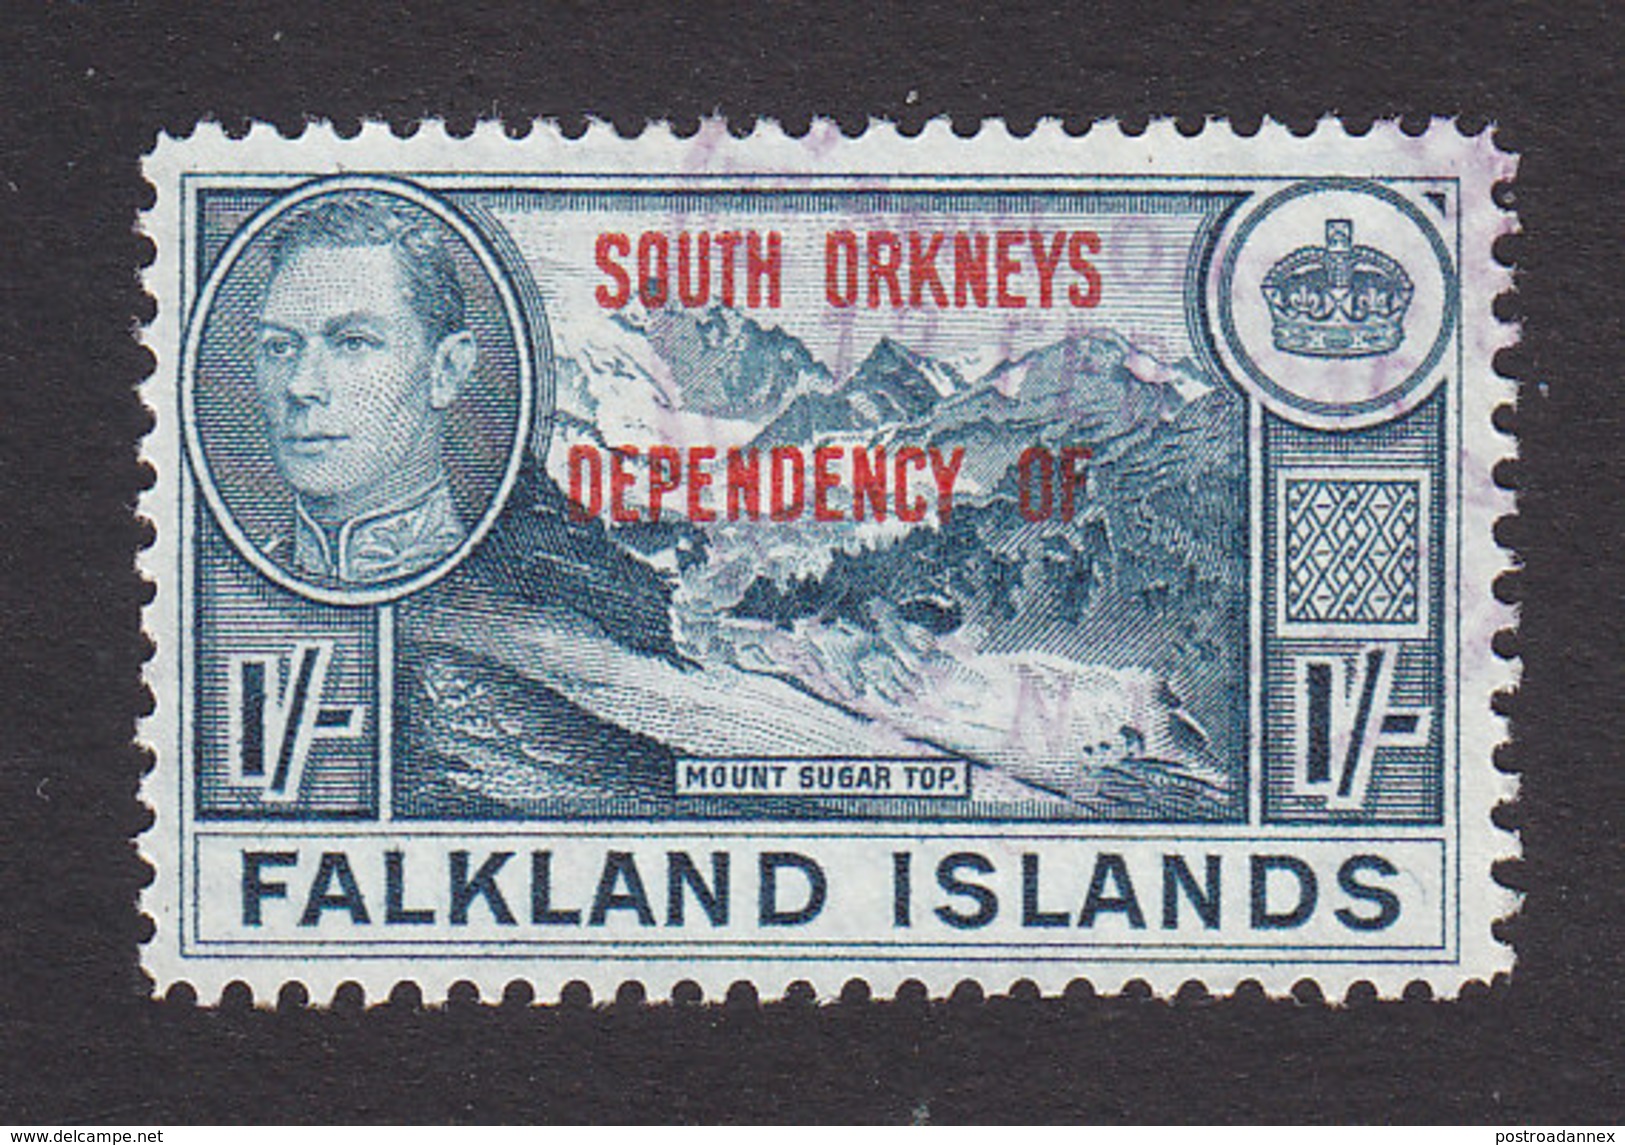 Falkland Islands, South Orkneys, Scott #4L8, Used, Ship Overprinted, Issued 1944 - Falkland